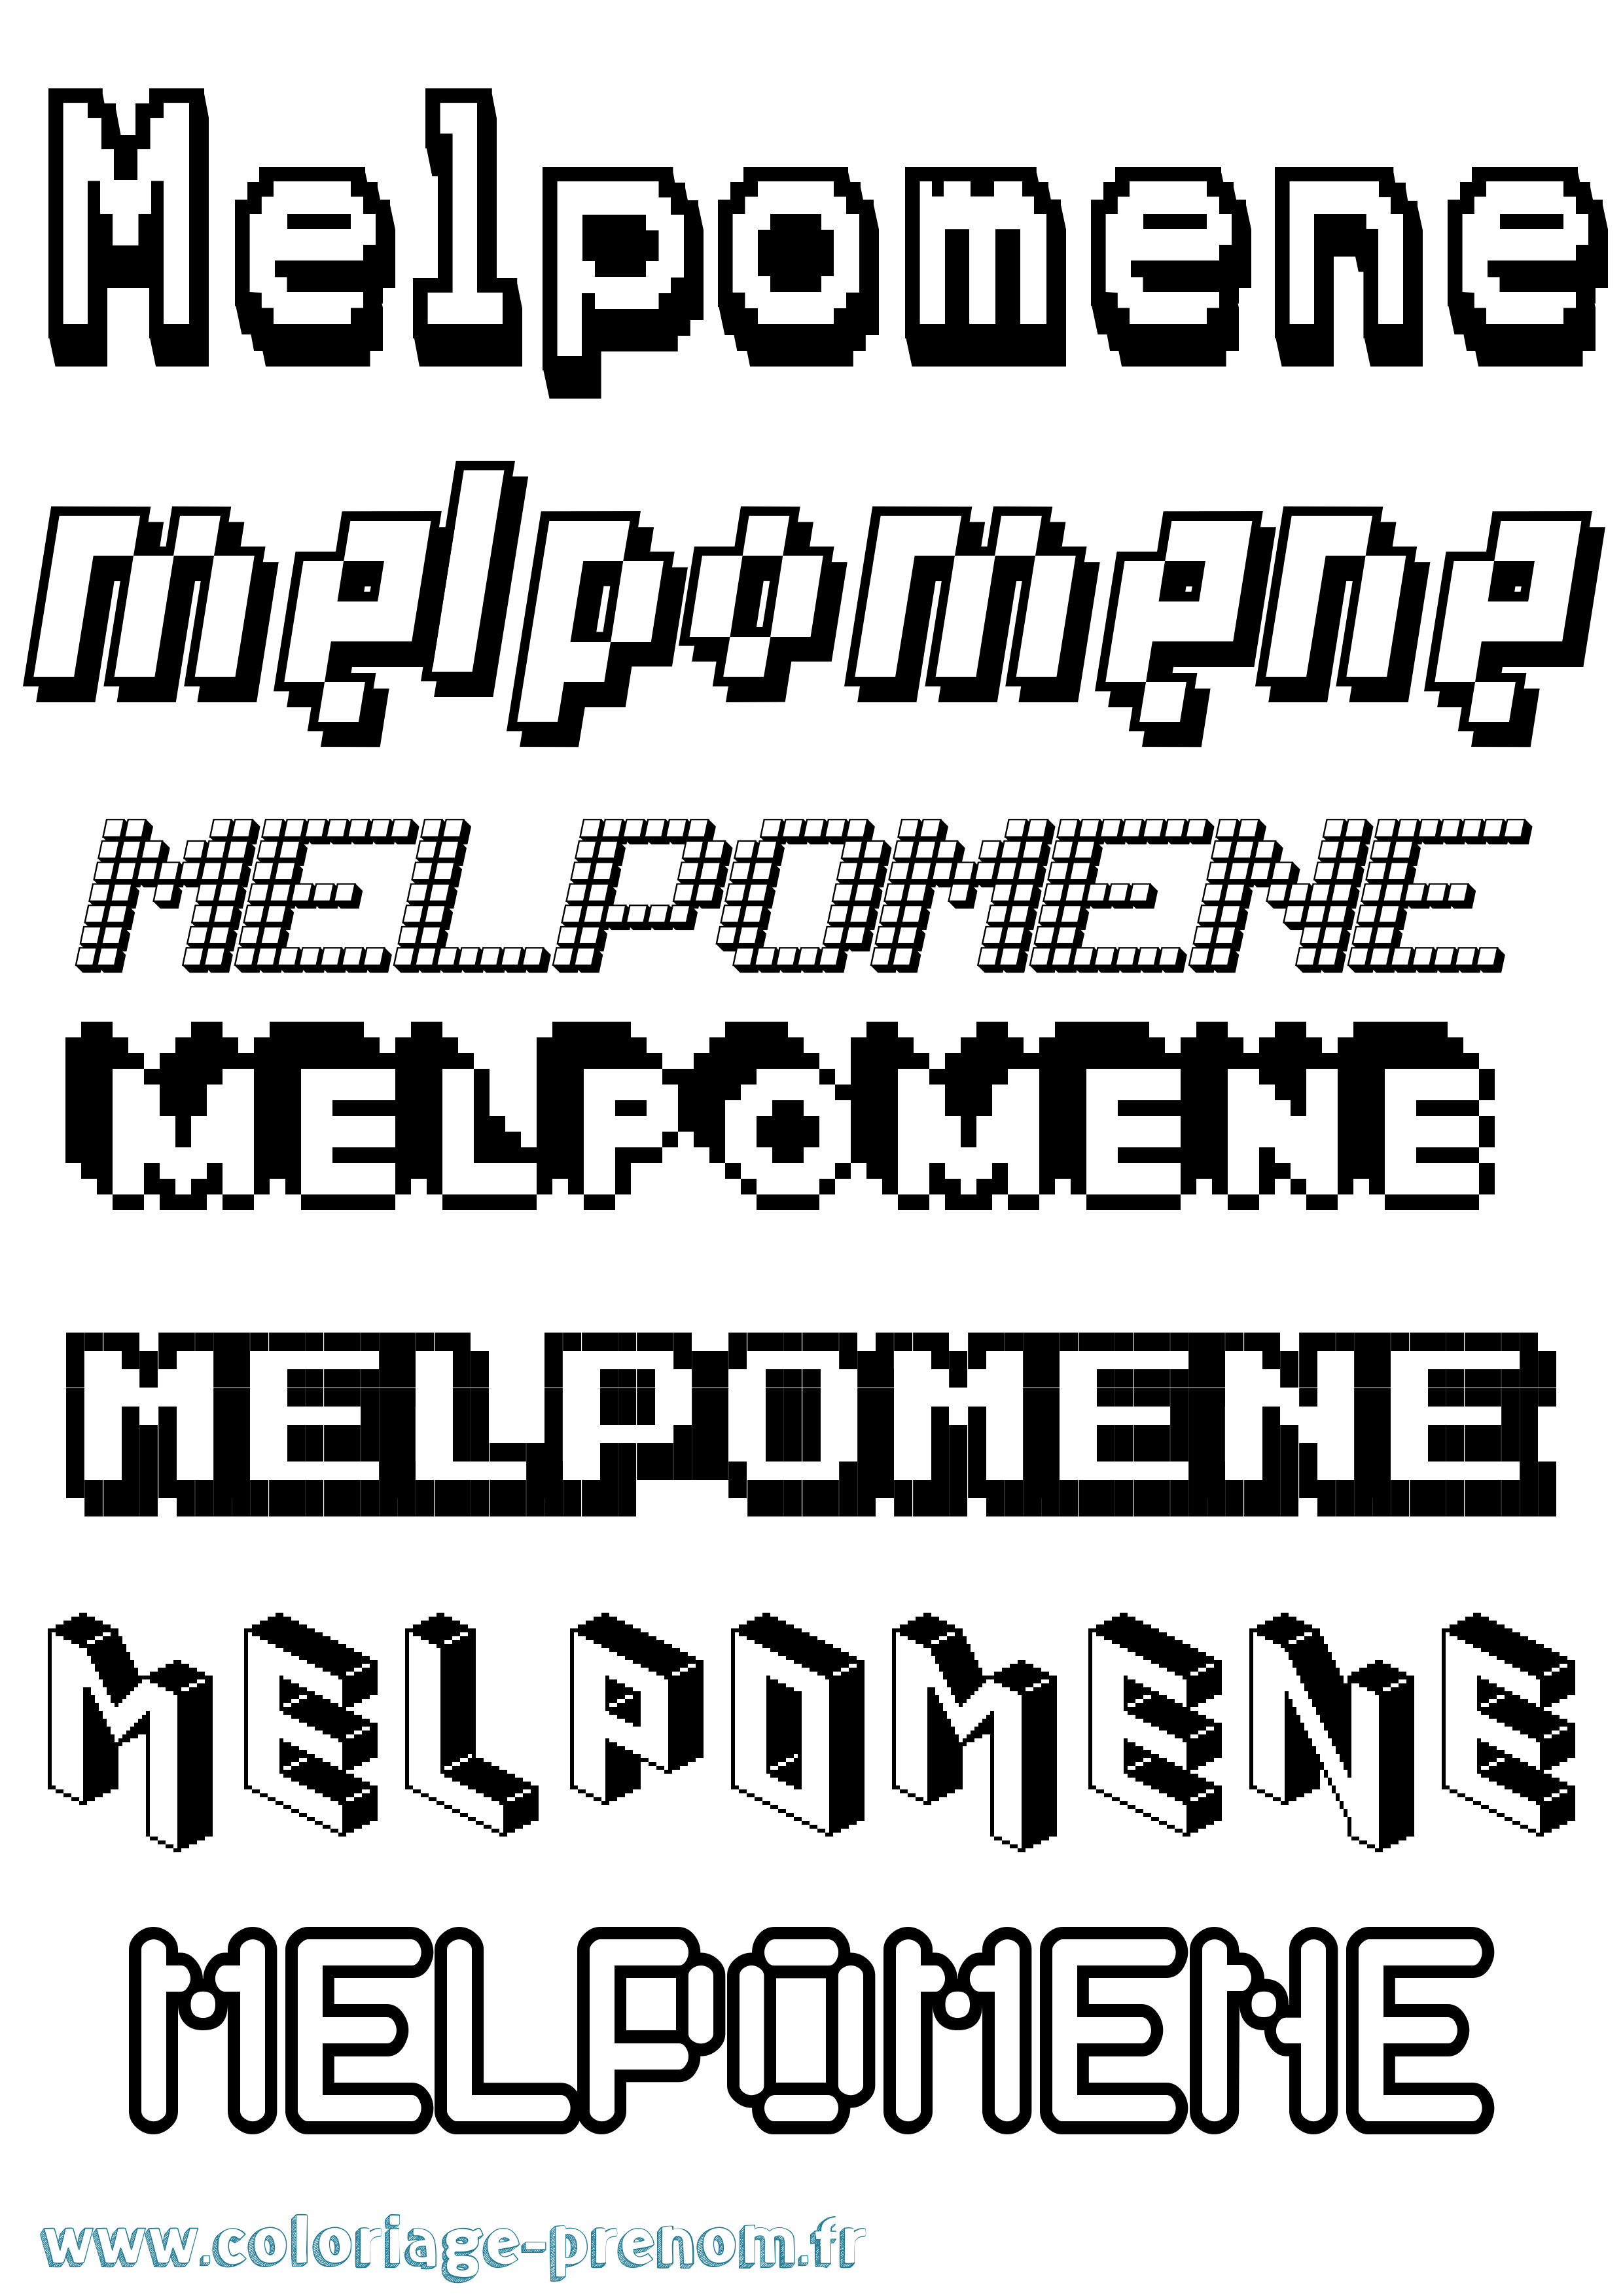 Coloriage prénom Melpomene Pixel